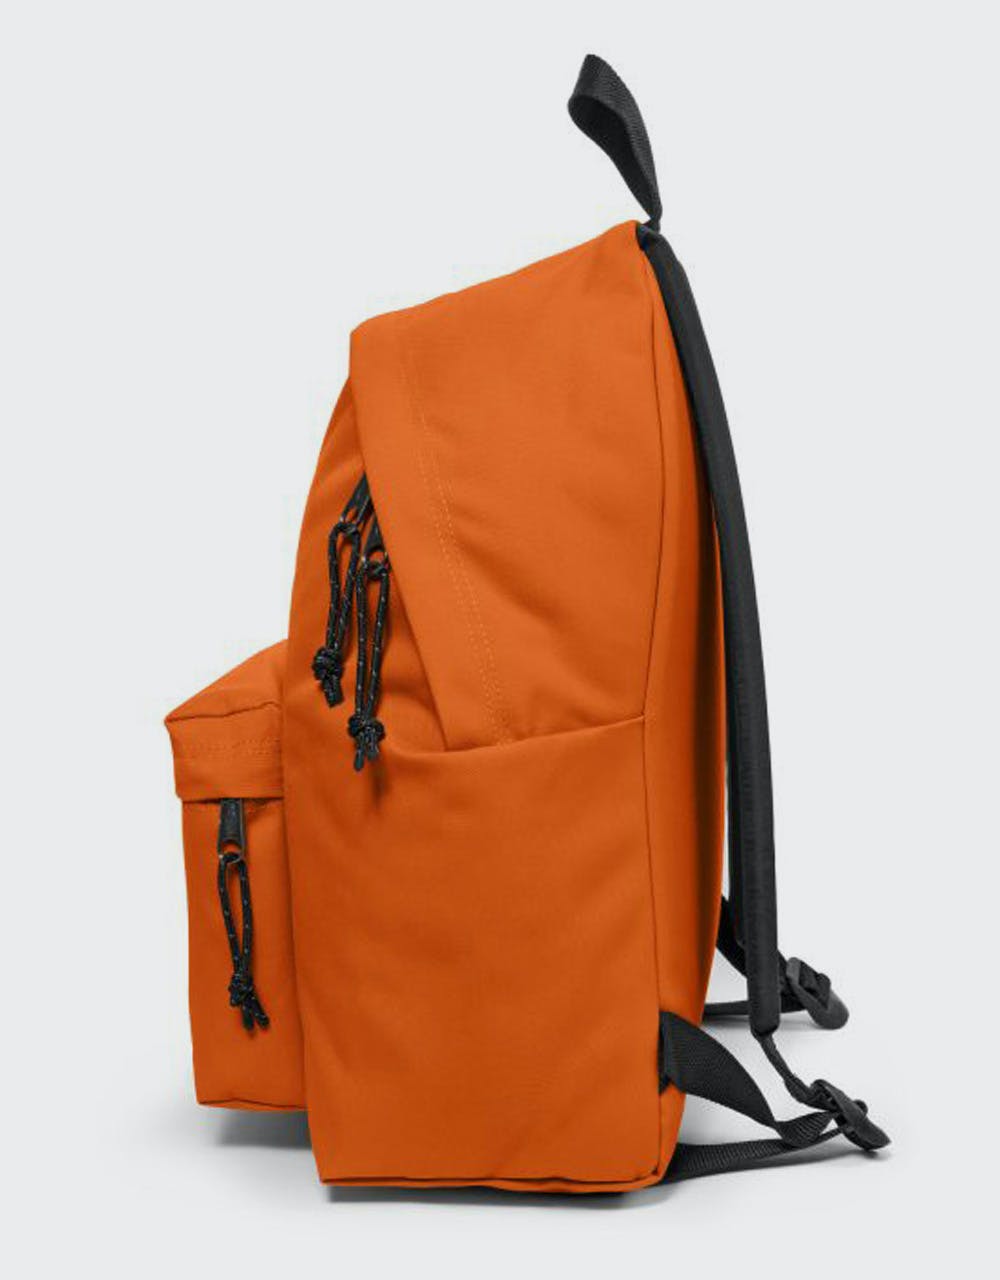 Eastpak Padded Pak'R Backpack - Cheerful Orange